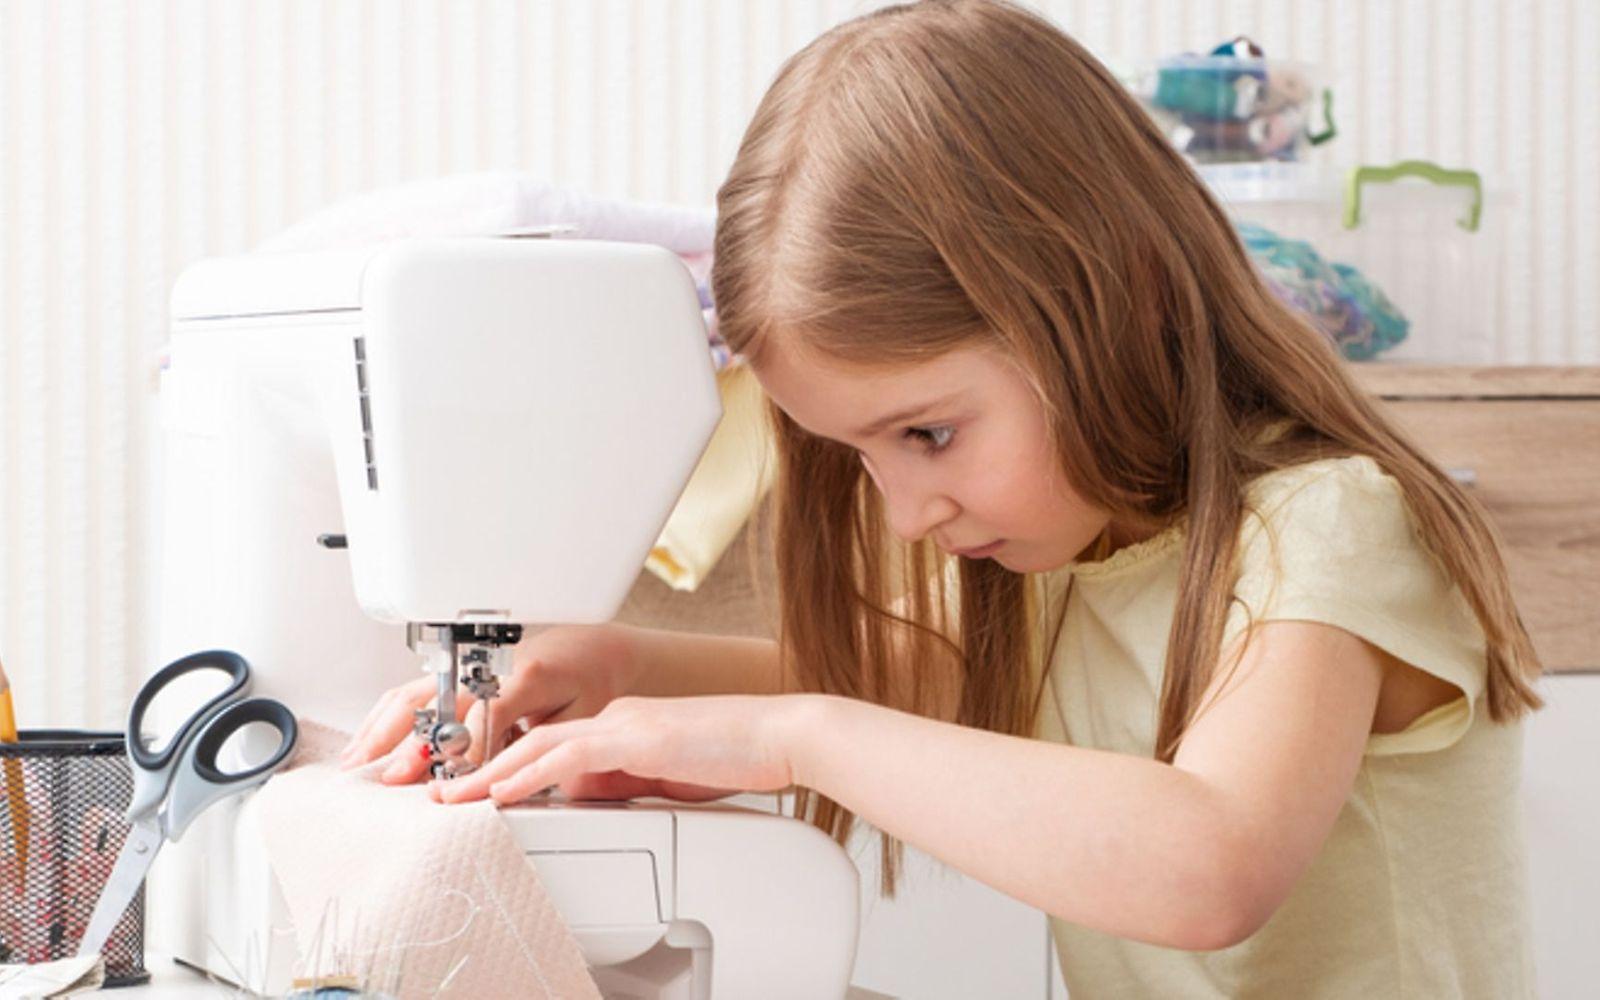 Symbolbild Nähen mit Kindern: Ein Mädchen näht mit einer Nähmaschine